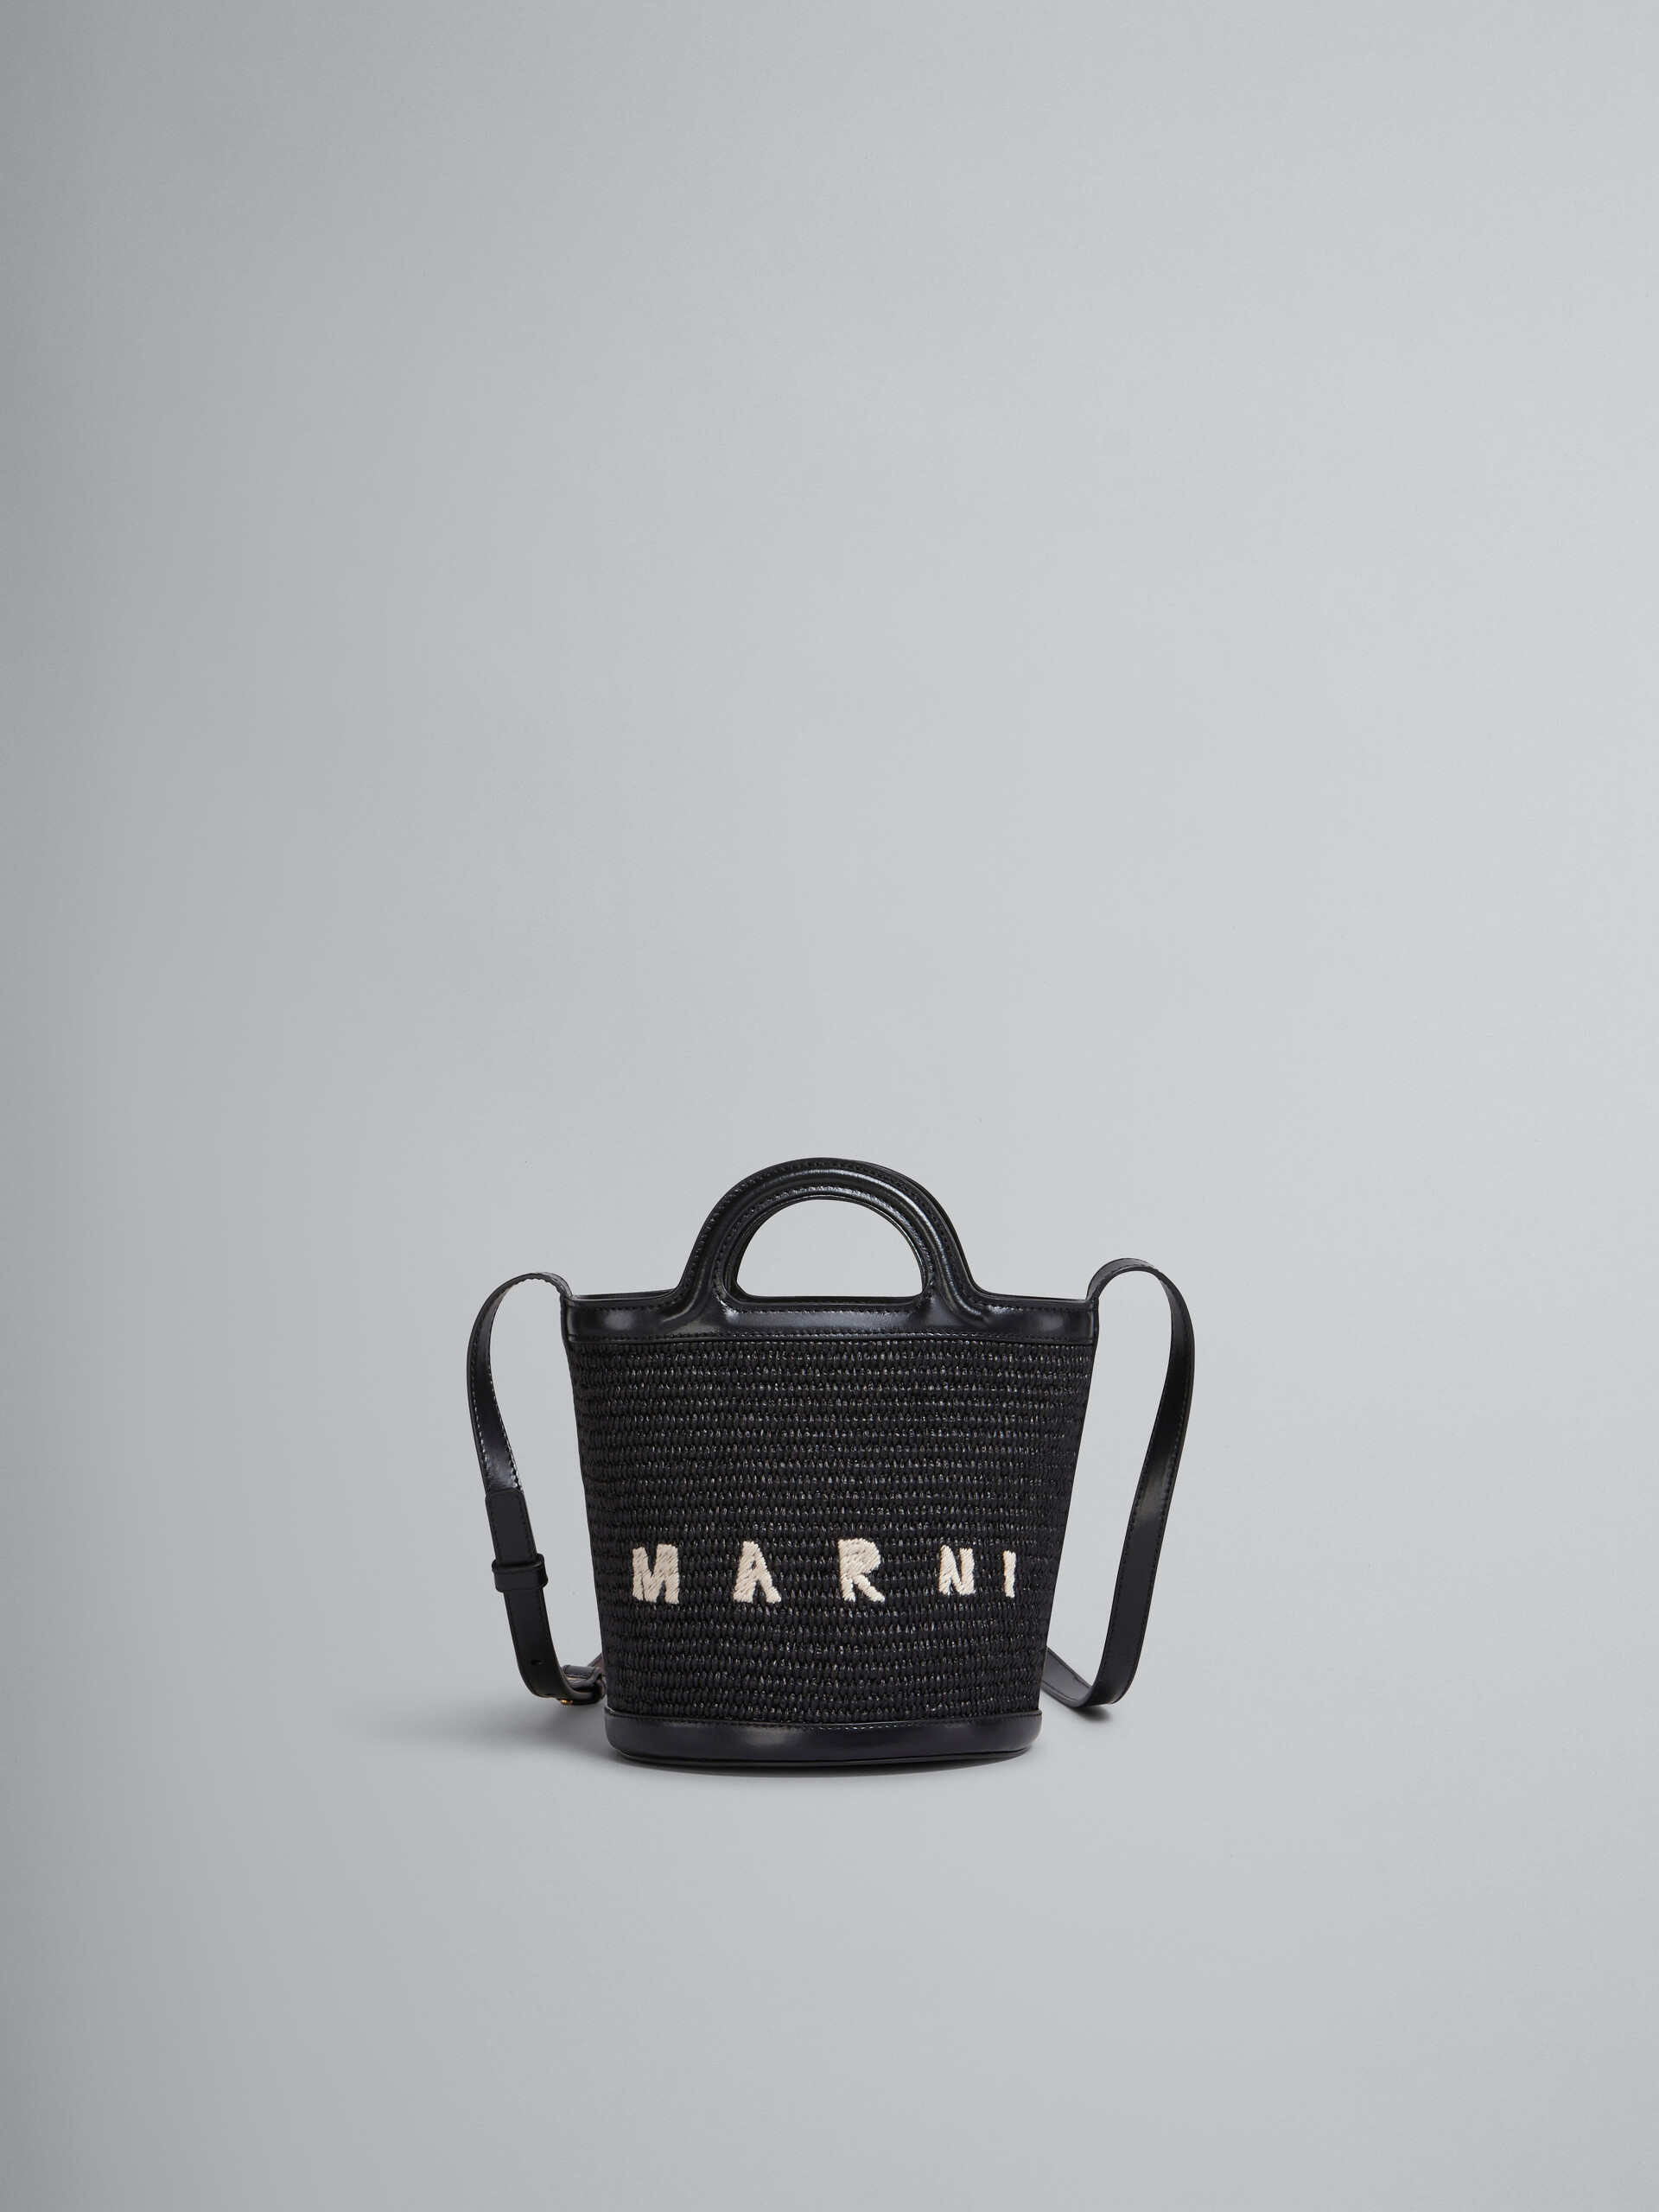 TROPICALIA small bucket bag in black leather and raffia